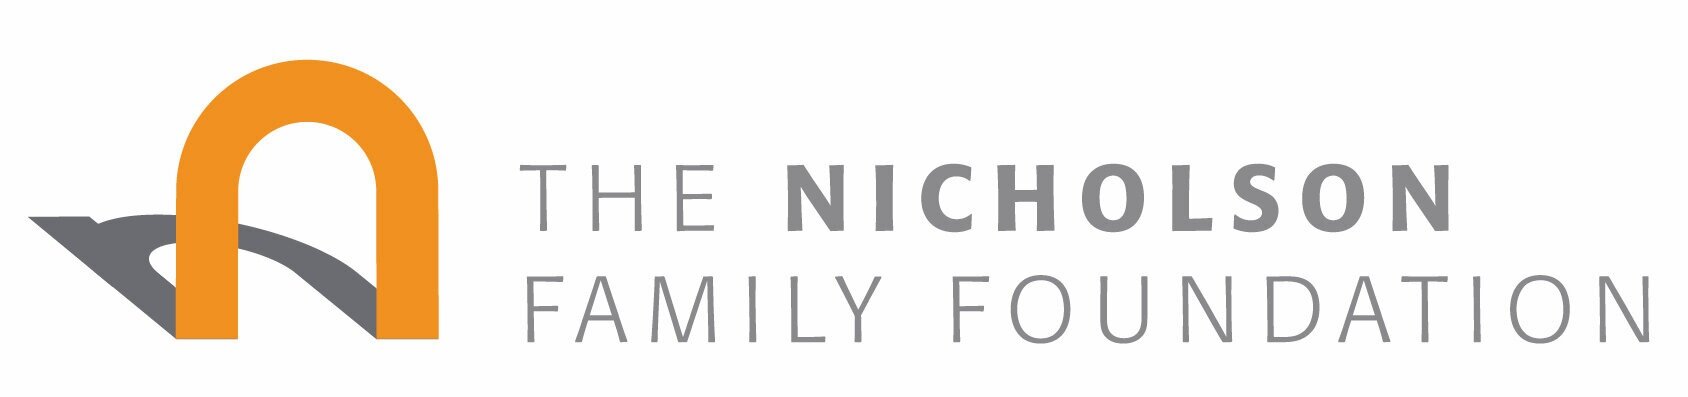 The Nicholson Family Foundation